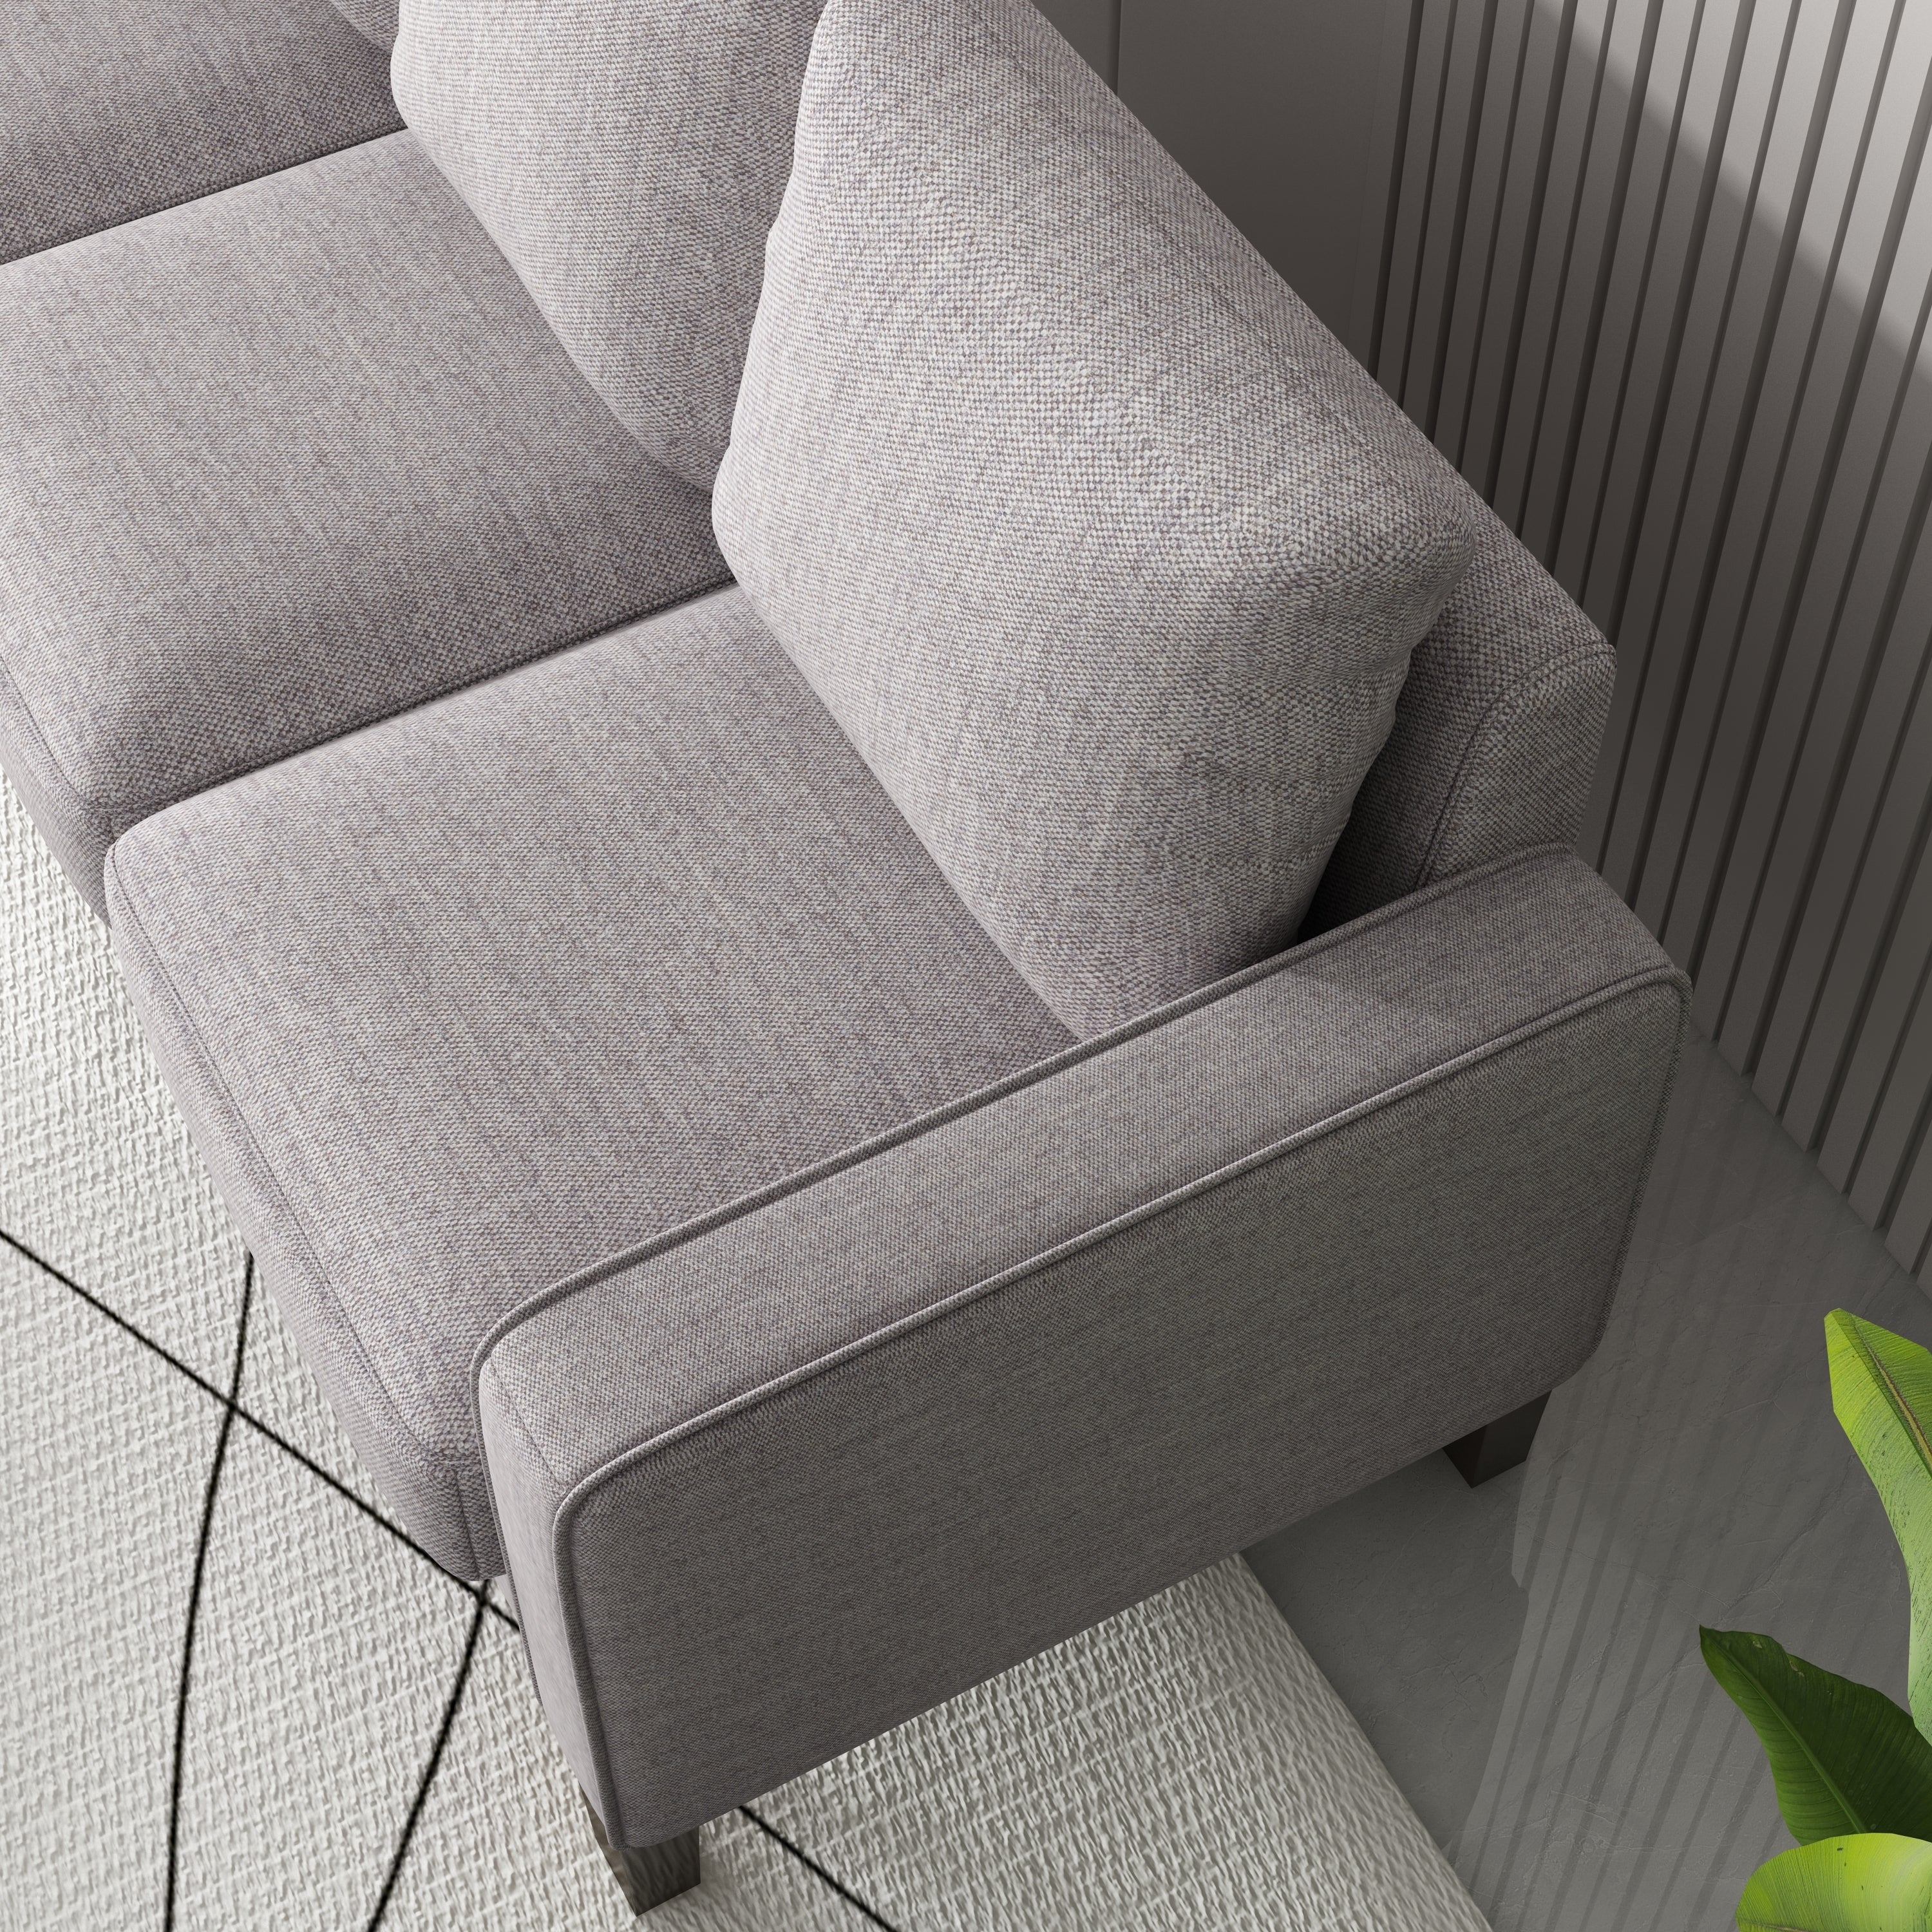 Modern Living Room Furniture Sofa in Light Grey Fabric